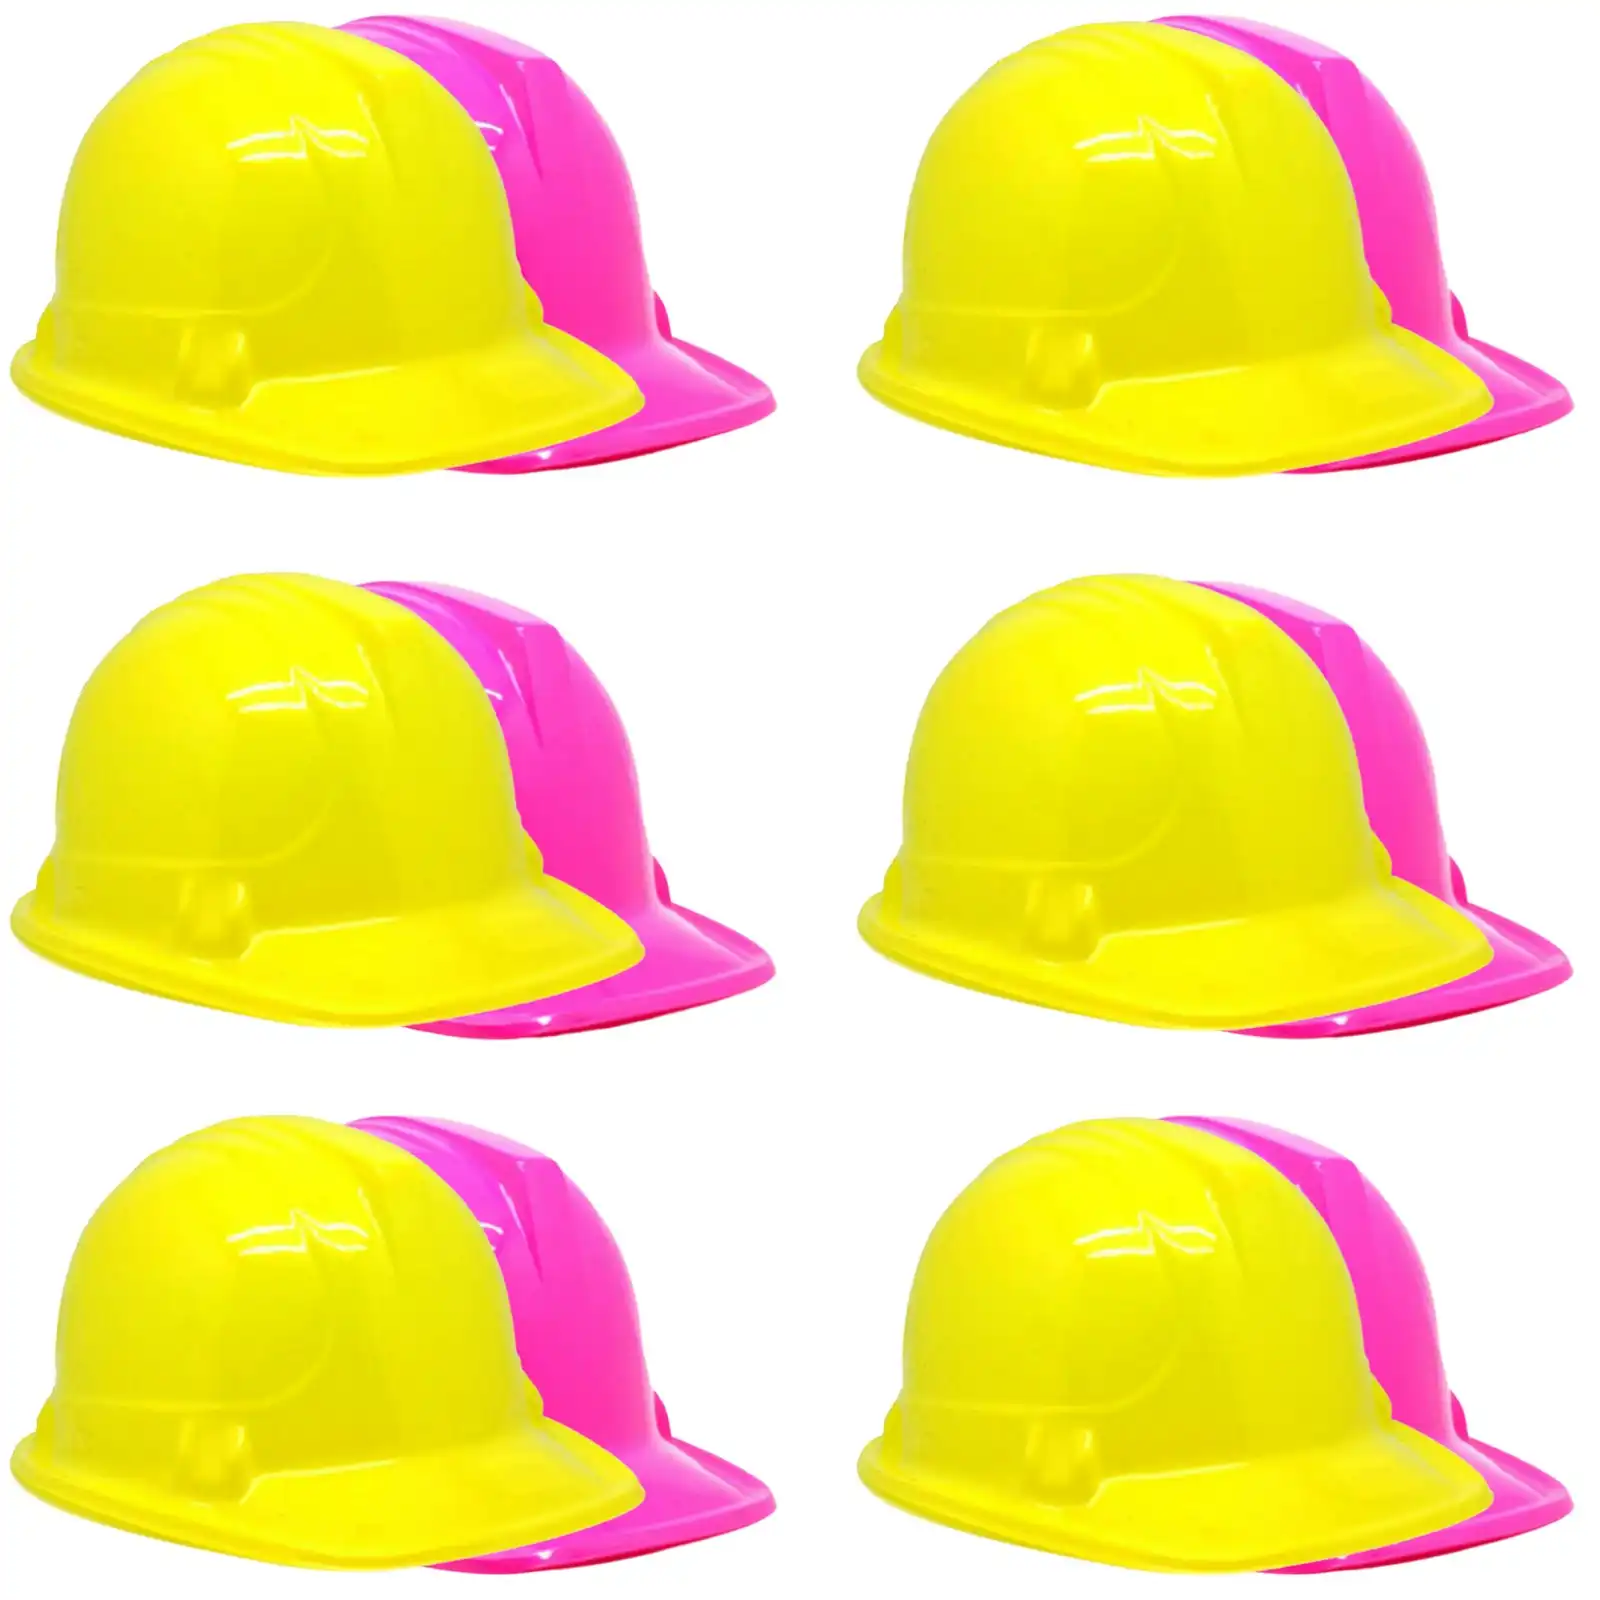 12x KIDS BUILDER HATS Construction Costume Party Helmet Safety Cap Childrens